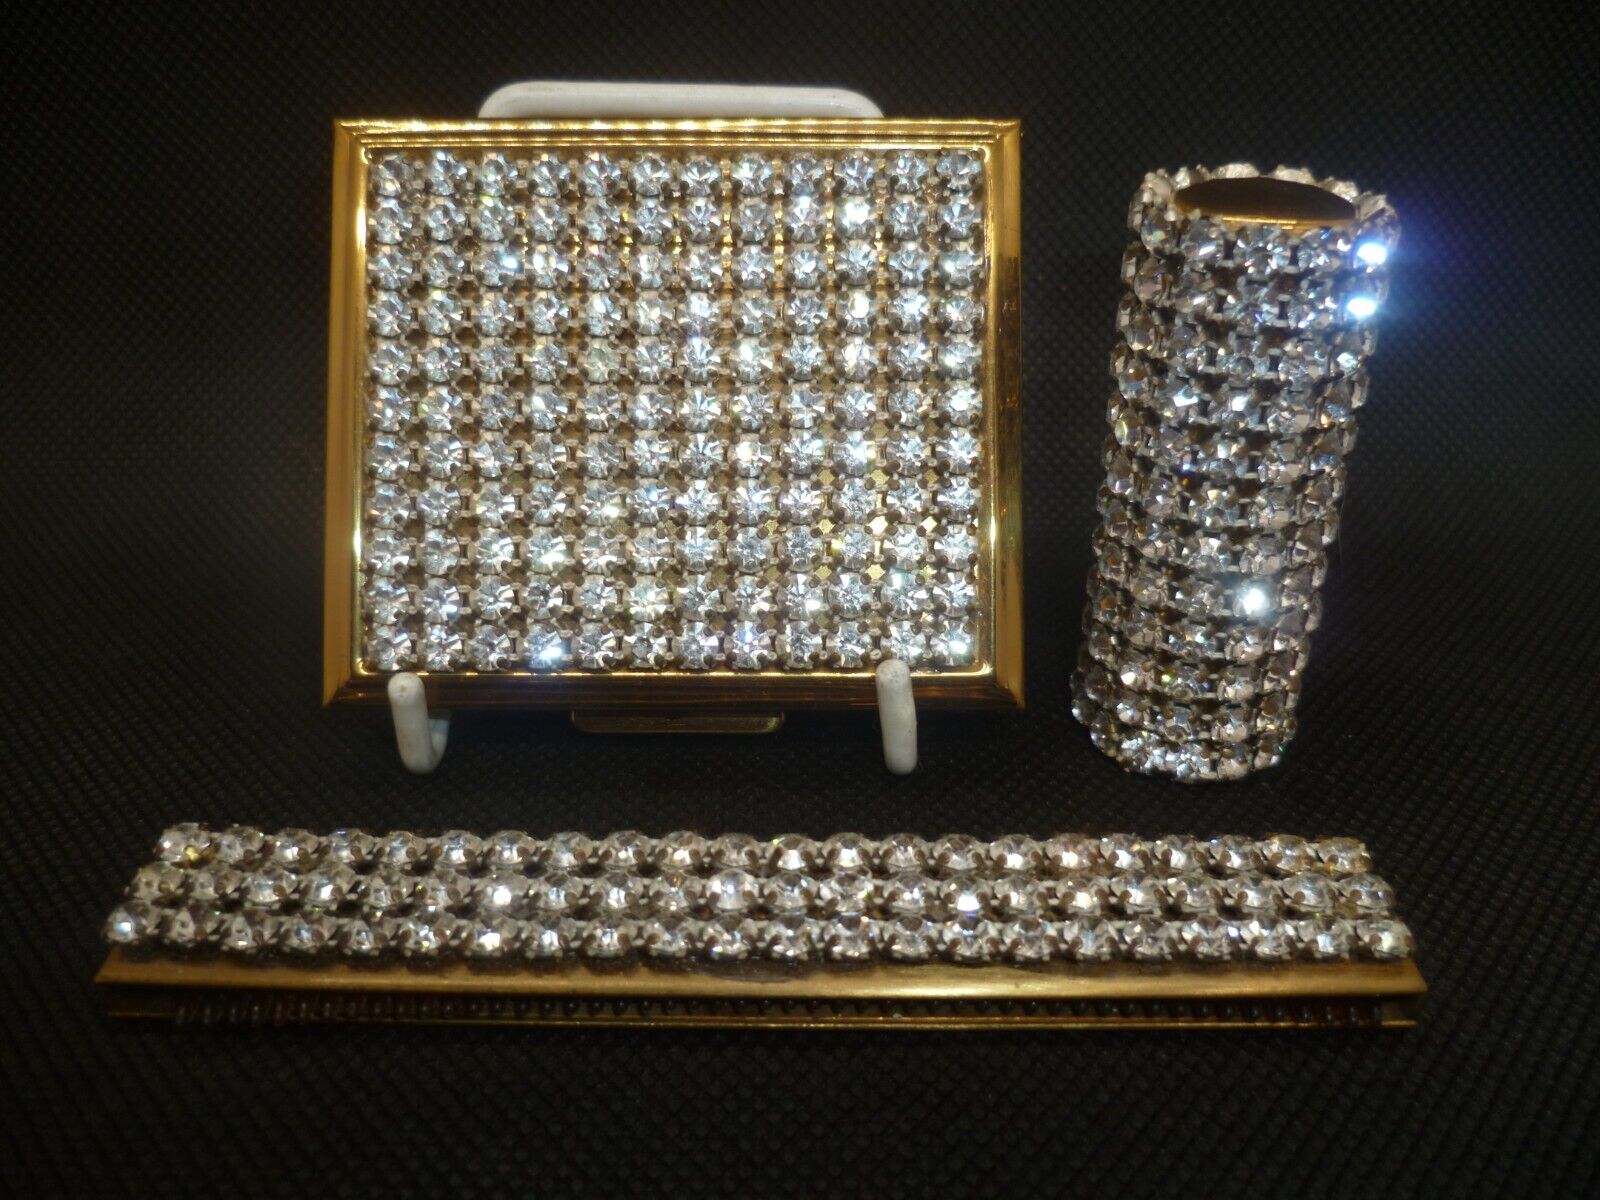 Diamante Rhinestones Powder Compact, Lipstick & Comb Set